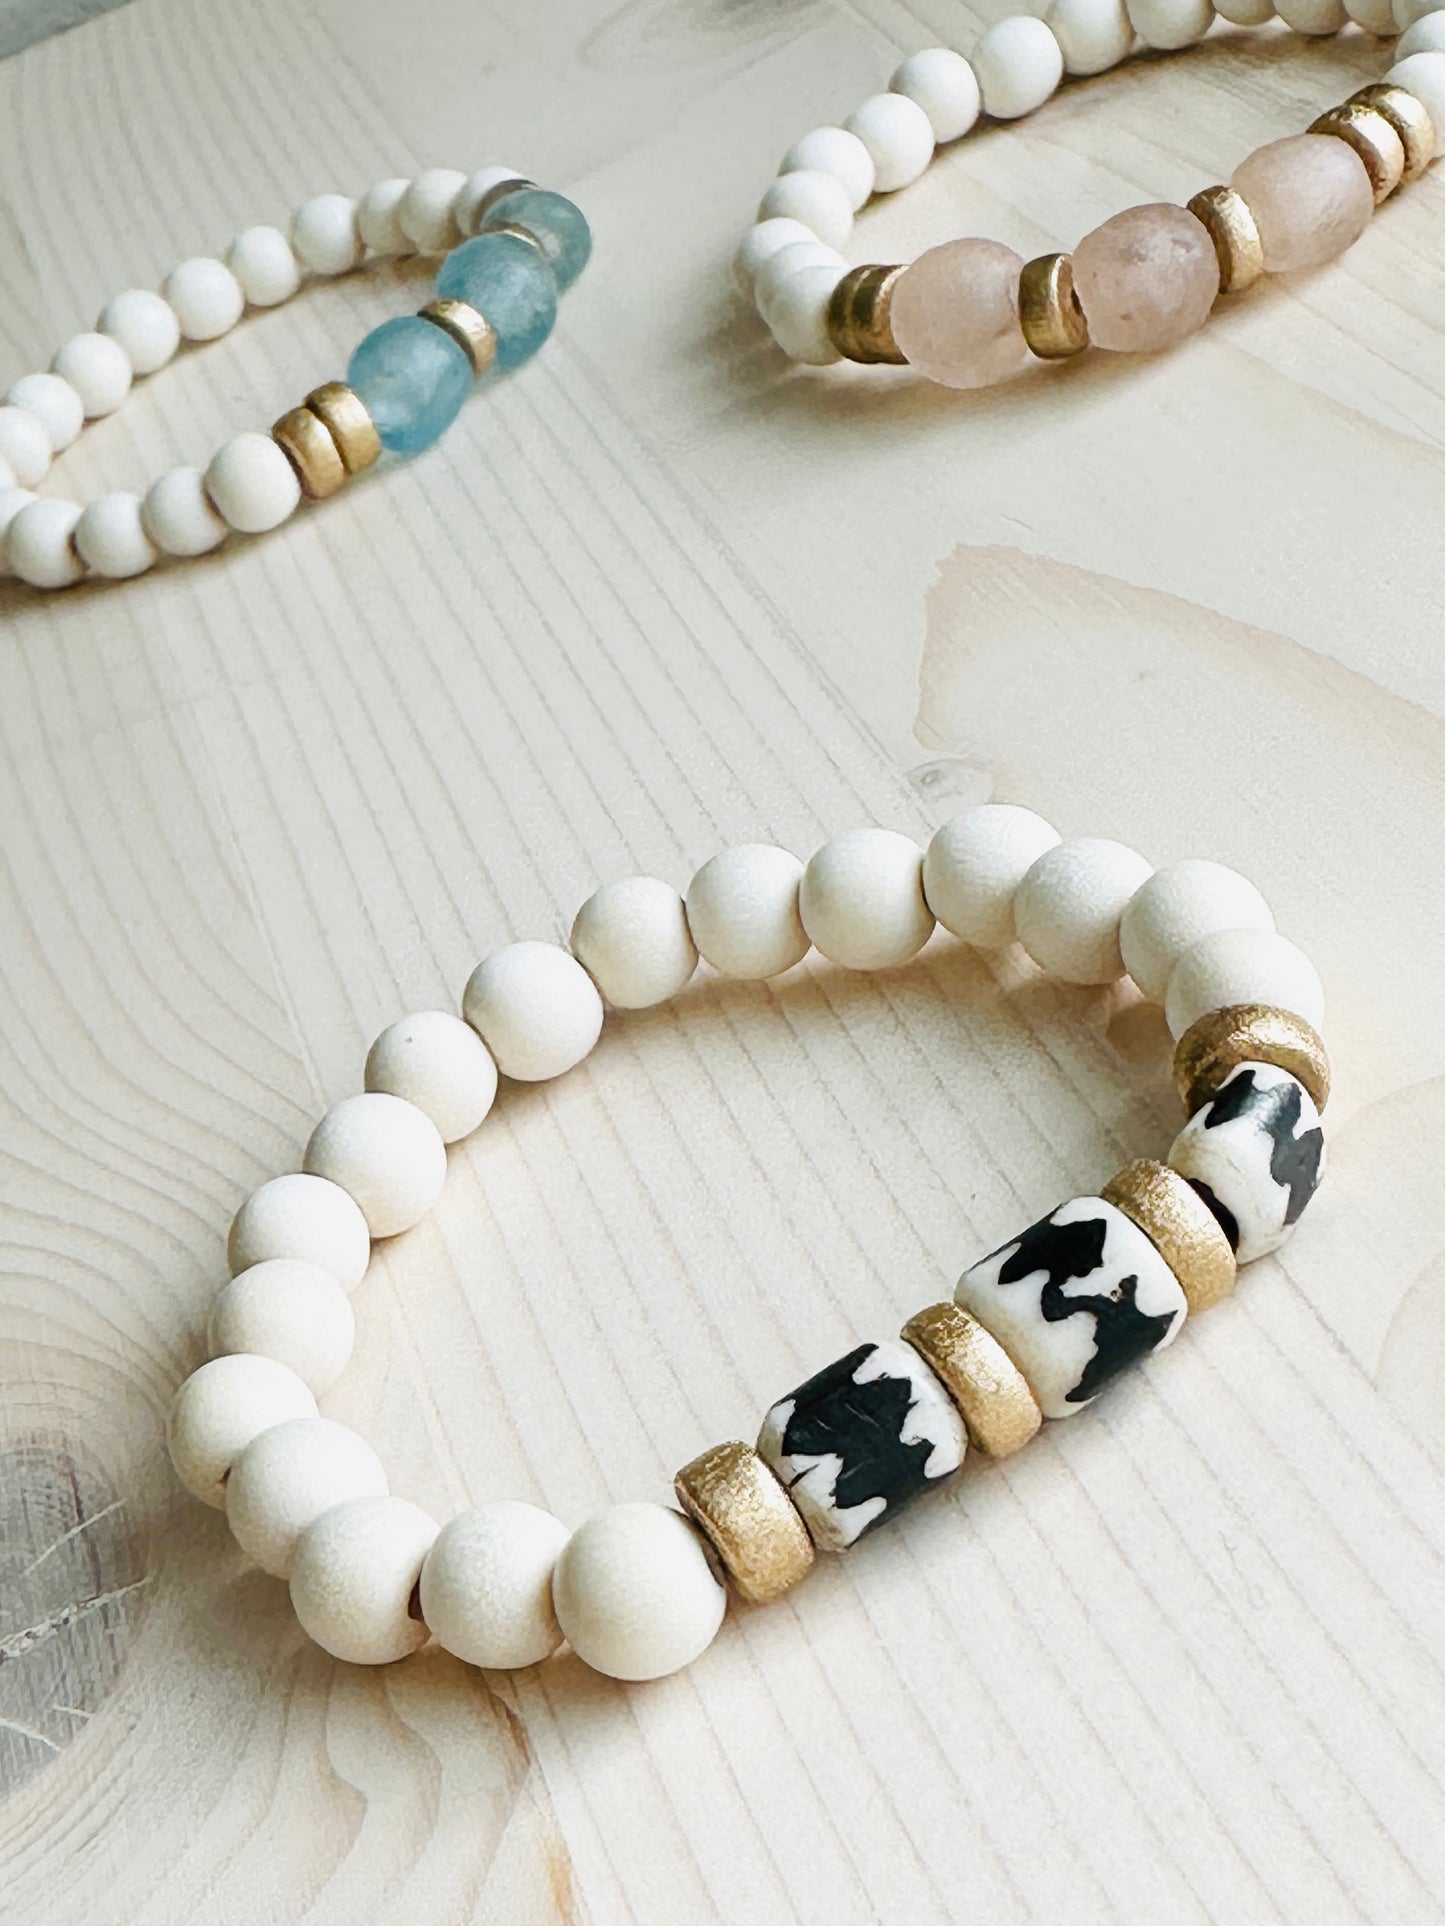 Blush, Ocean, and Zebra Batik Island Bracelets Handmade in the USA